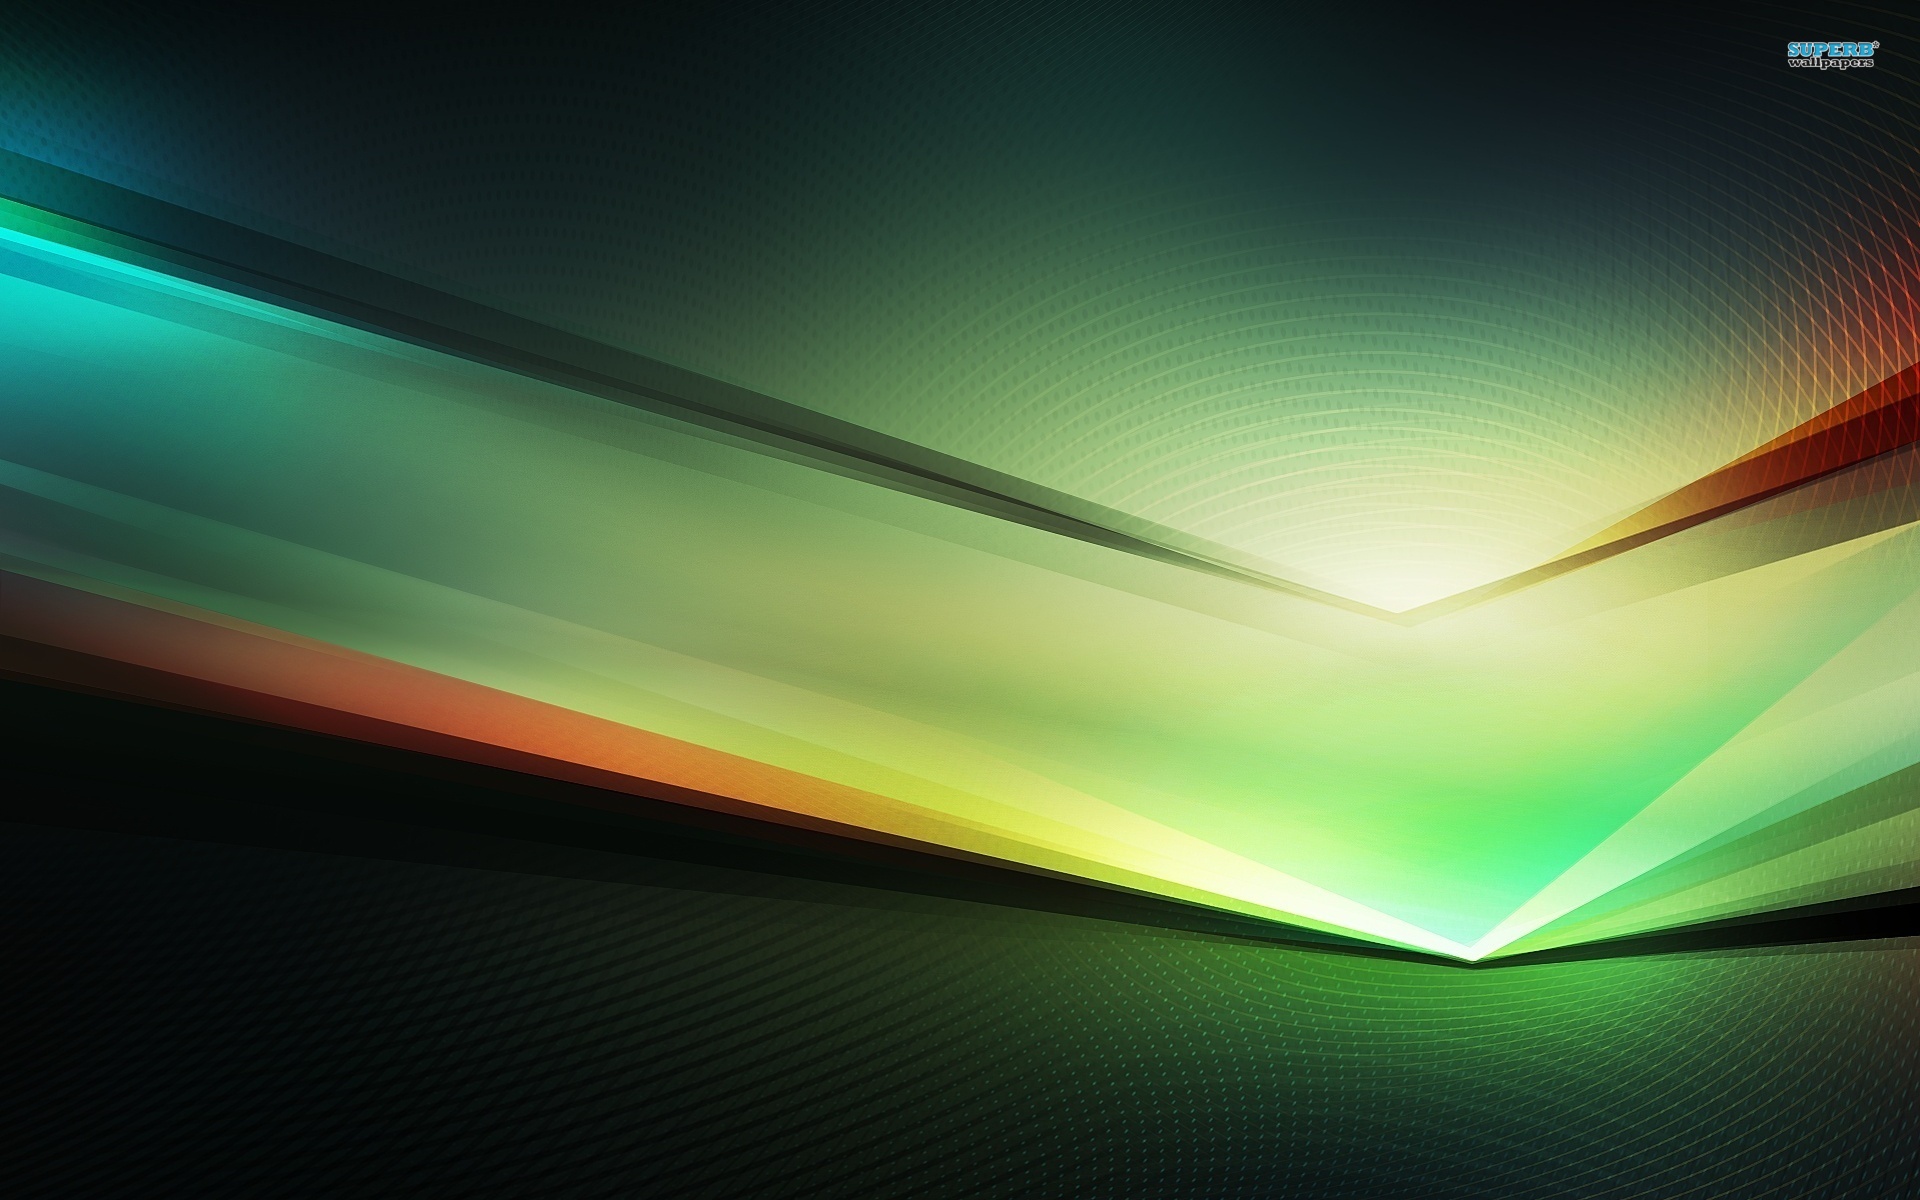 Acer Green Aspire Desktop And